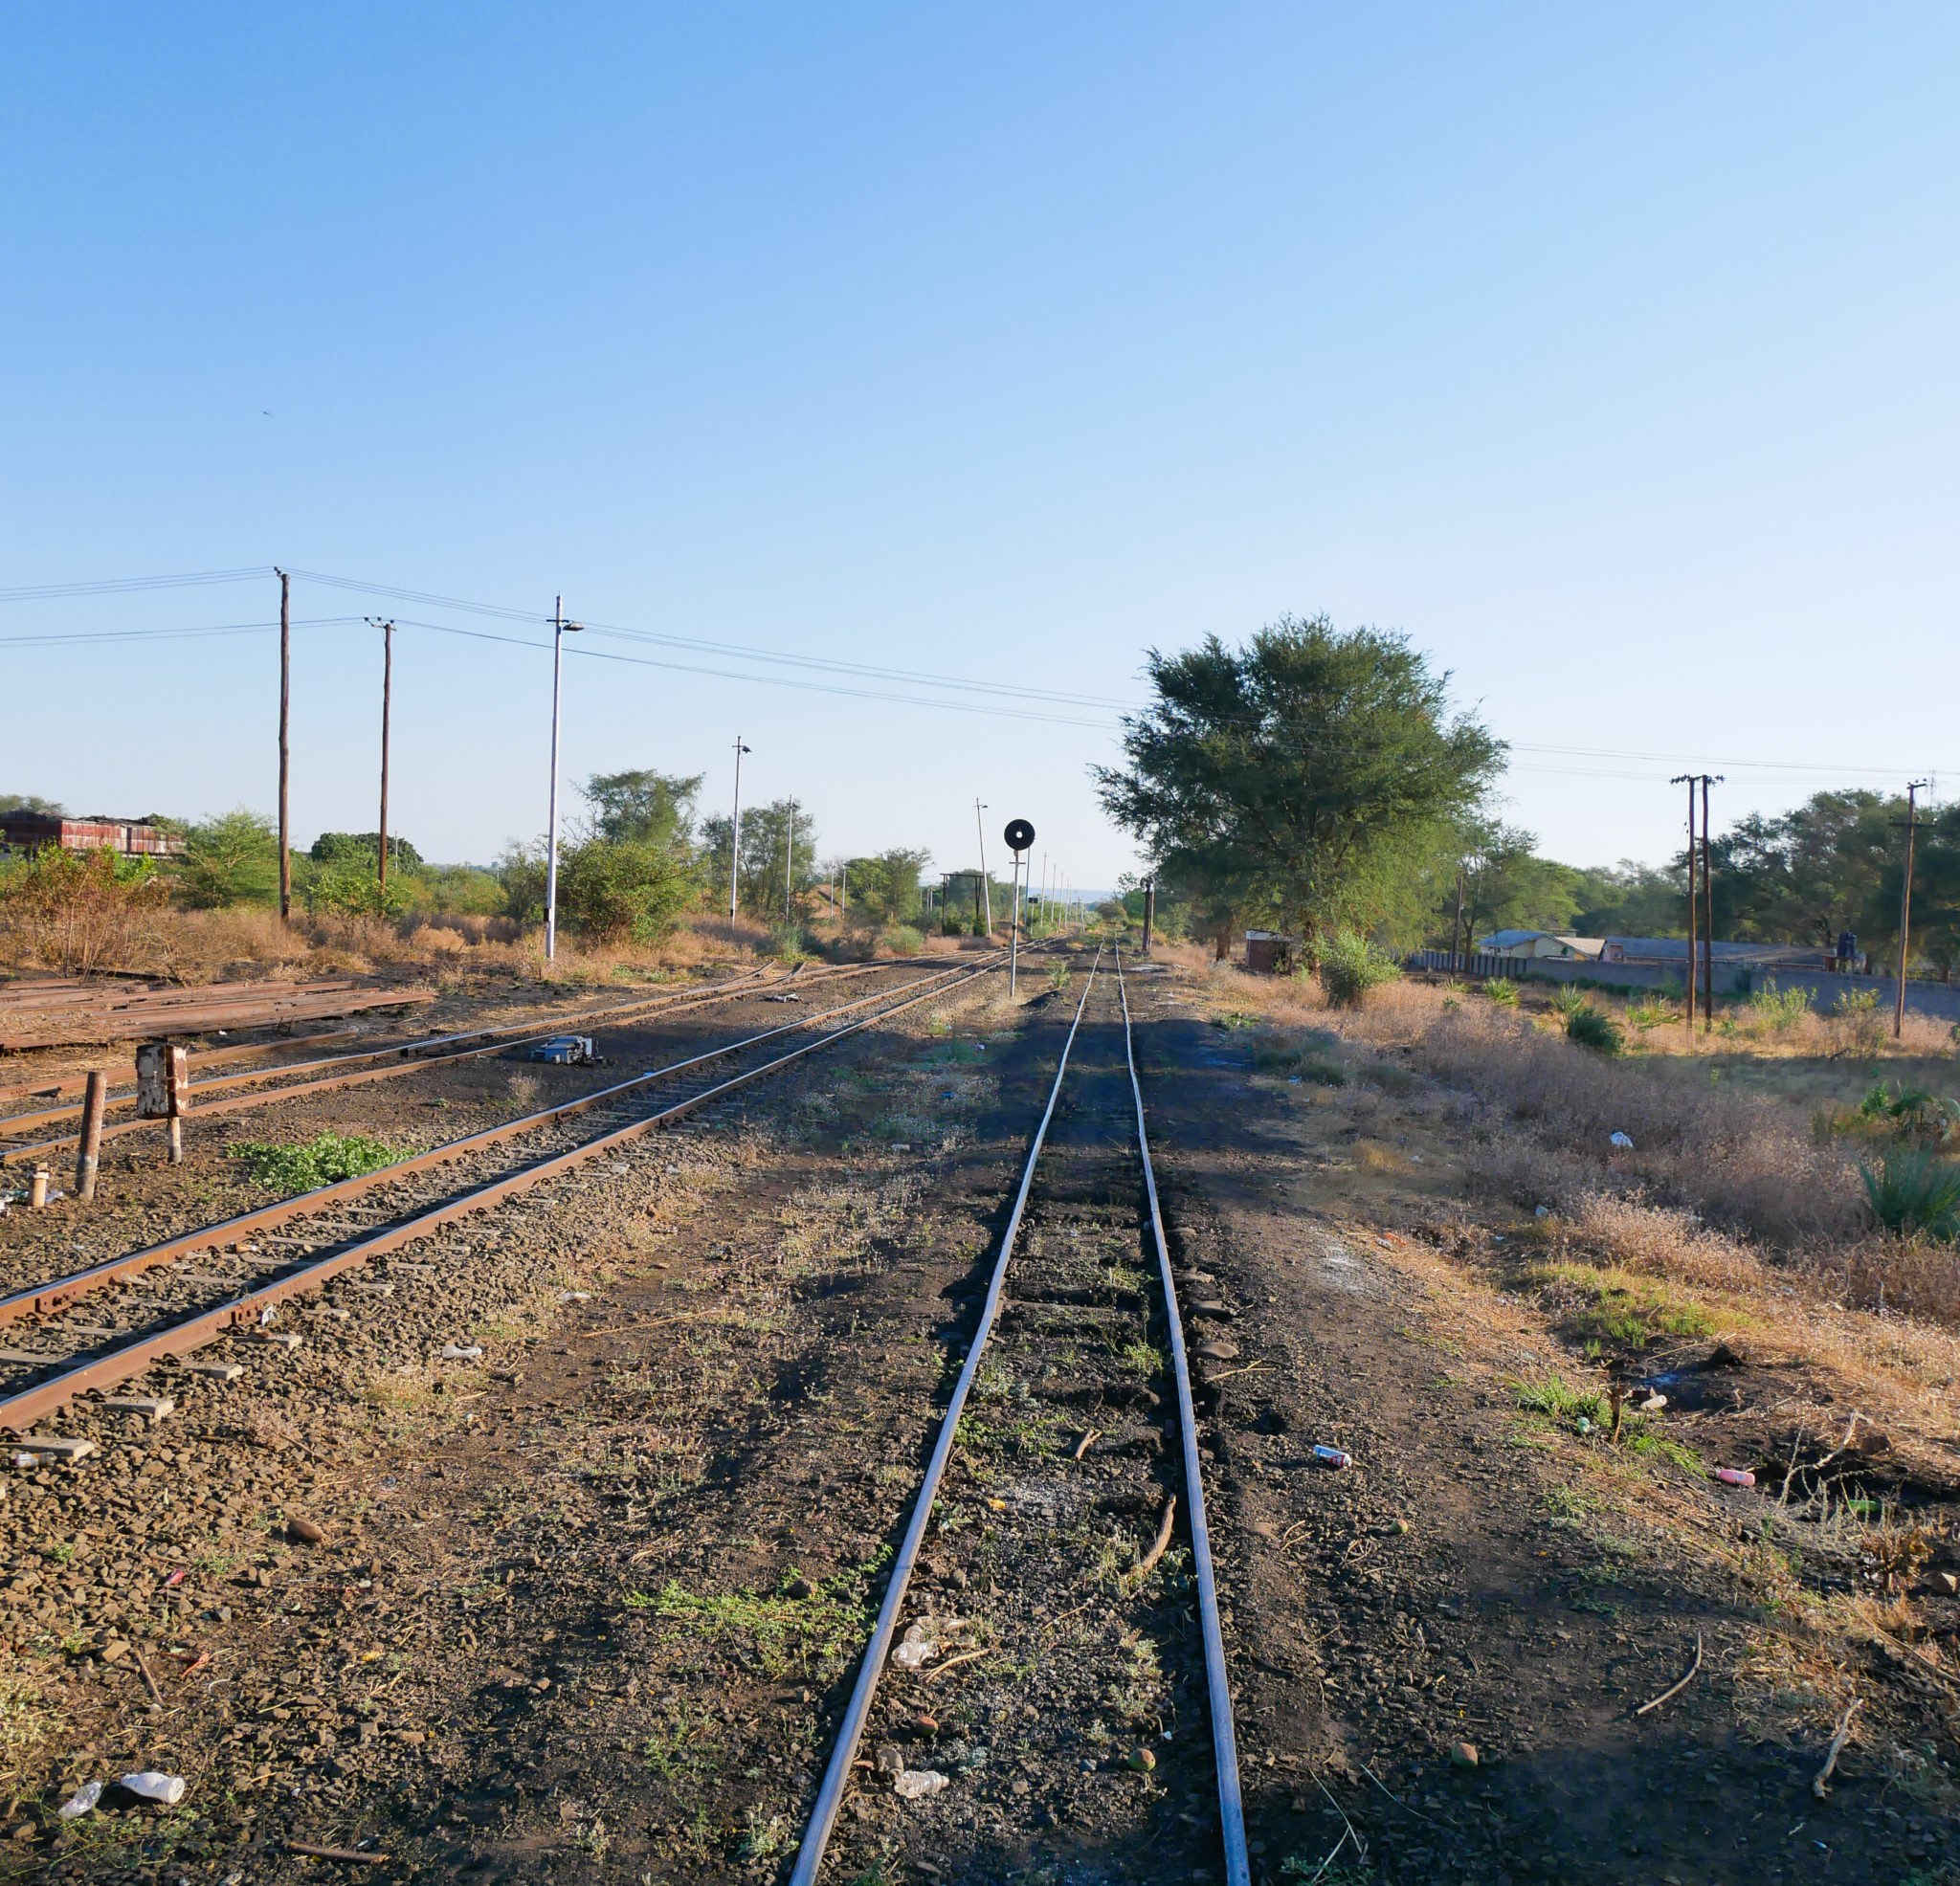 Train tracks along the sidings from the Royal Livingstone Express train